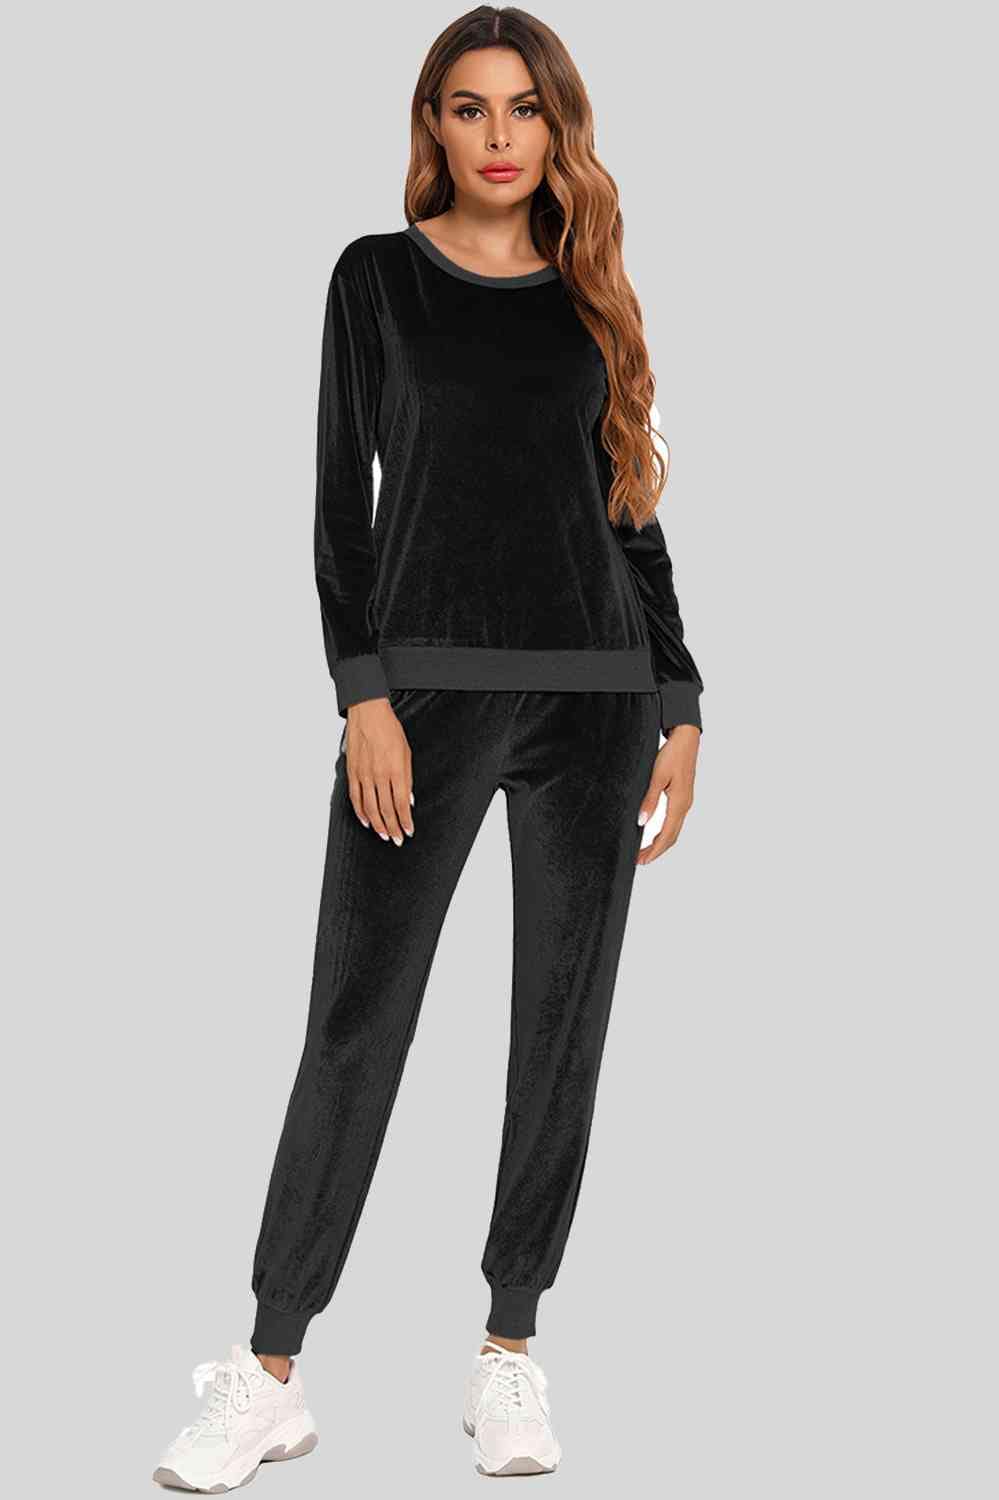 Round Neck Long Sleeve Loungewear Set with Pockets Black / S